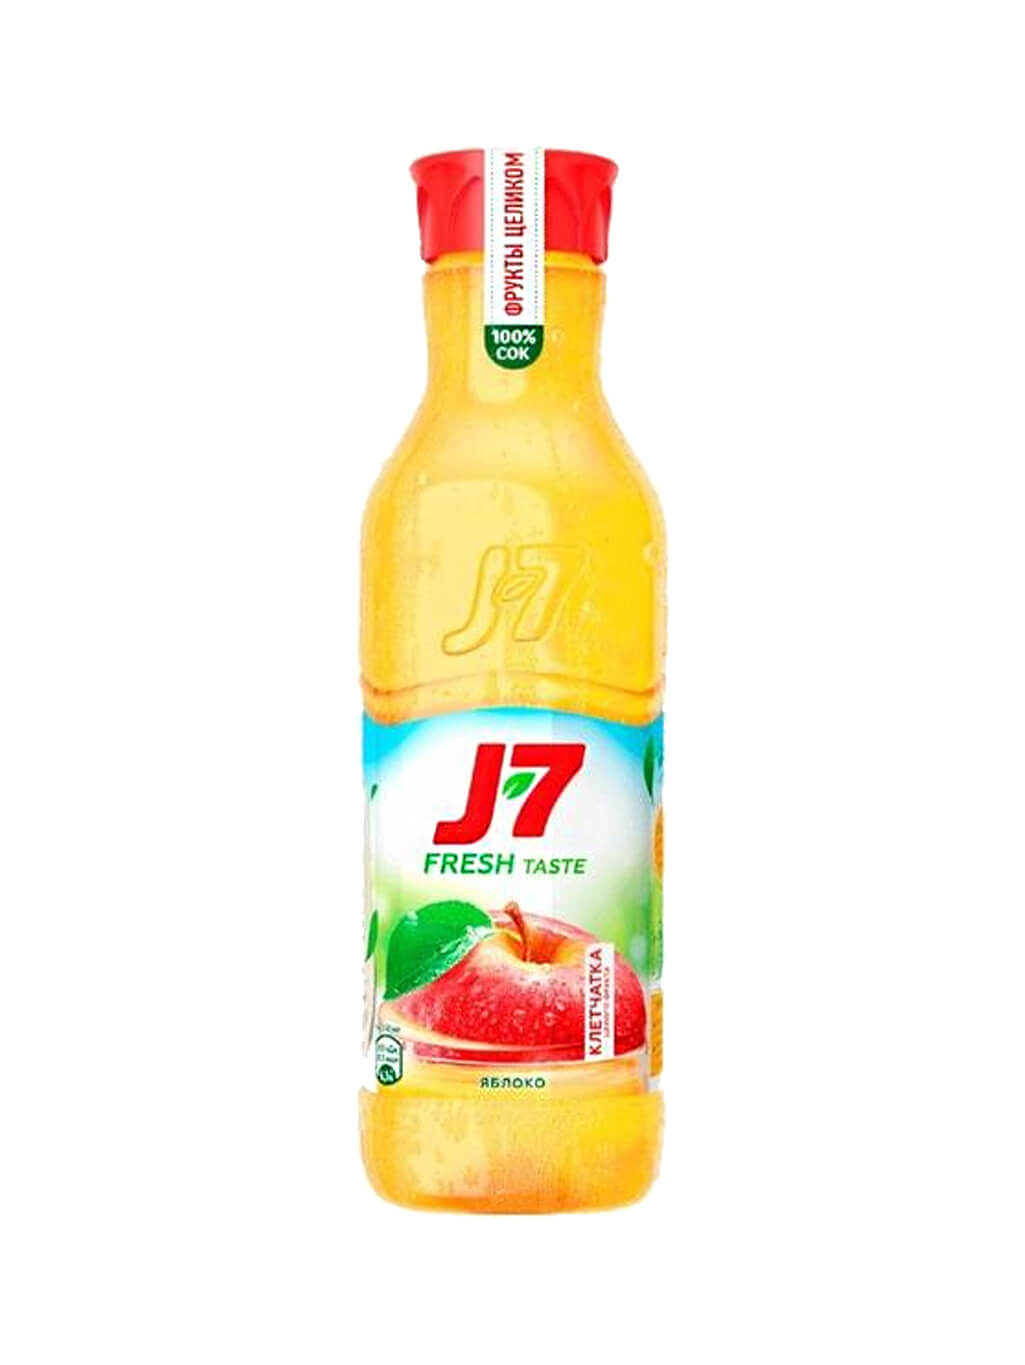 J7 fresh. Сок j7 Fresh. J7 Fresh 0.85 л. Сок j7 Fresh taste. Сок апельсиновый j-7 Fresh taste с мякотью 850 мл.